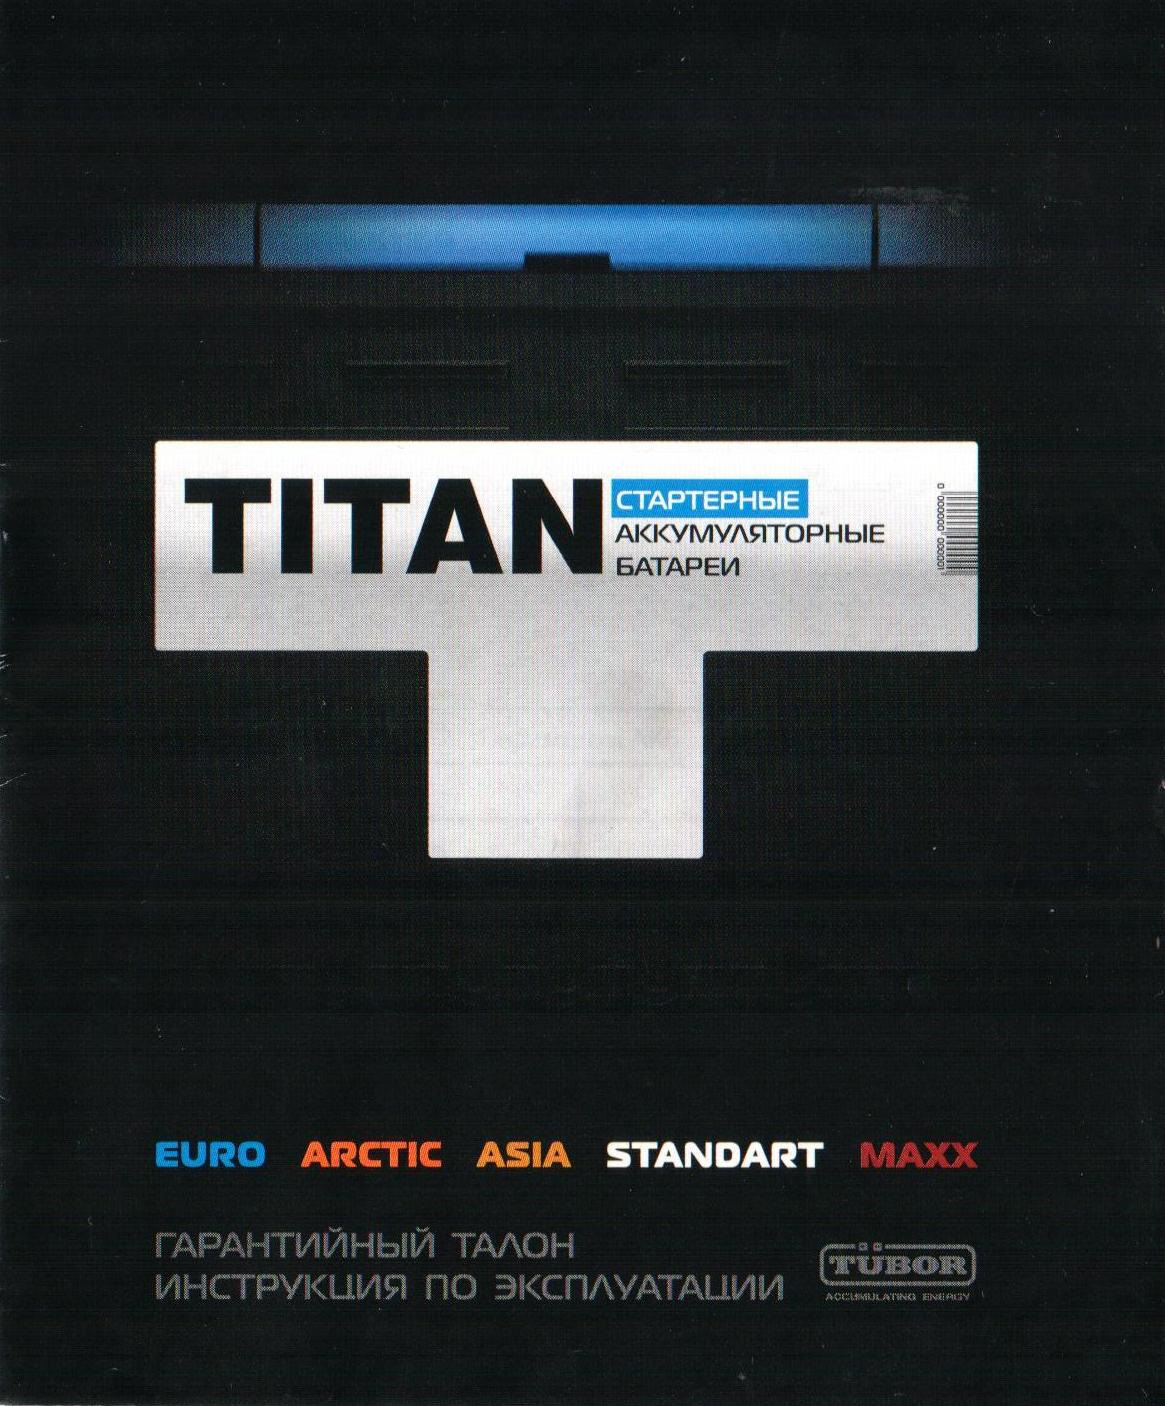 Дата аккумулятора титан. Инструкция по эксплуатации АКБ Титан. Дата на аккумуляторе Титан. Дата изготовления Титан АКБ. Расшифровка даты АКБ Титан.